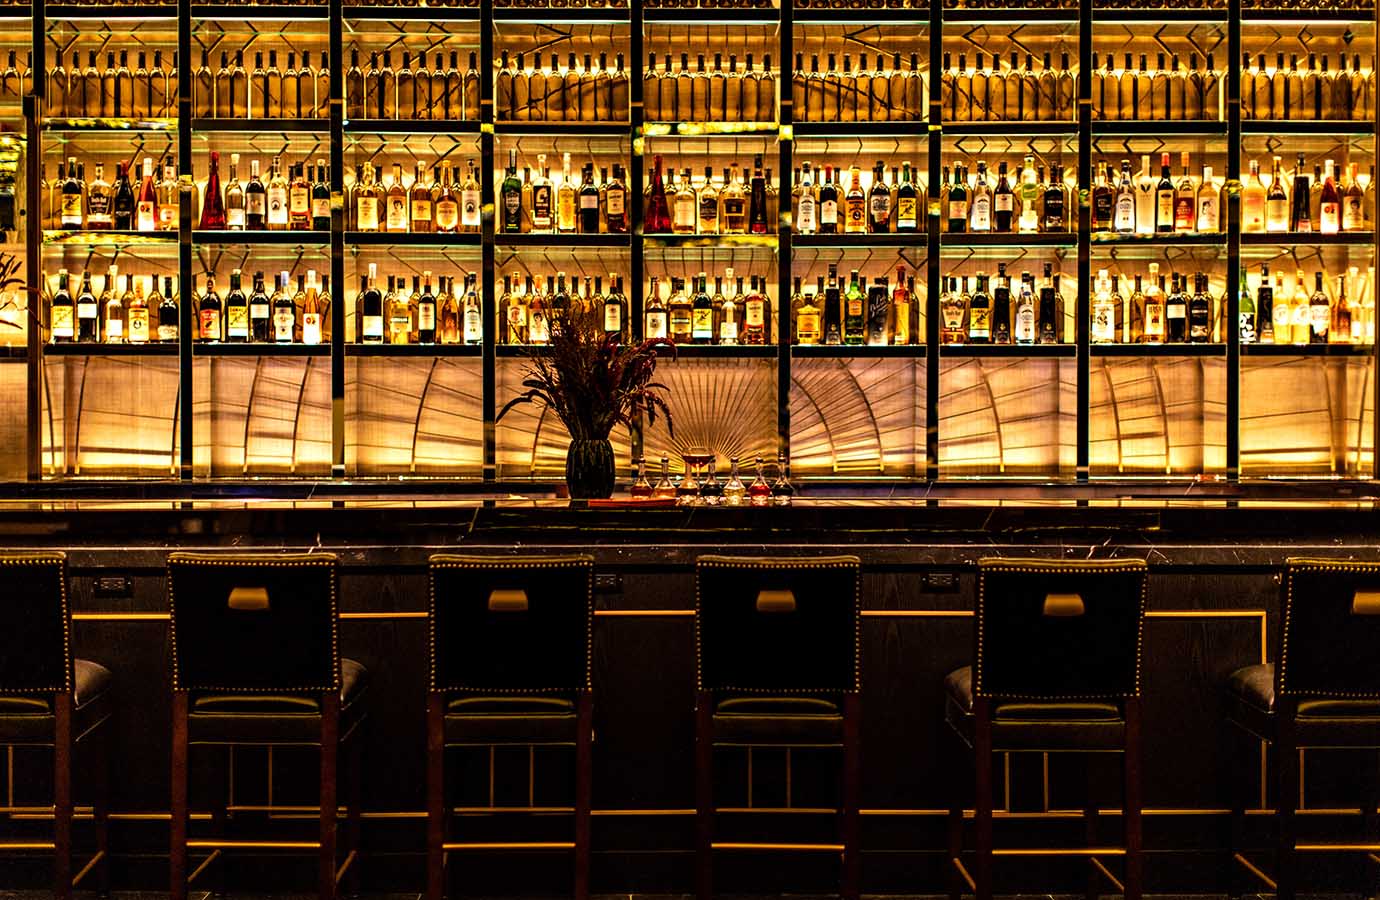 Elegant lit bar with alcohol on display